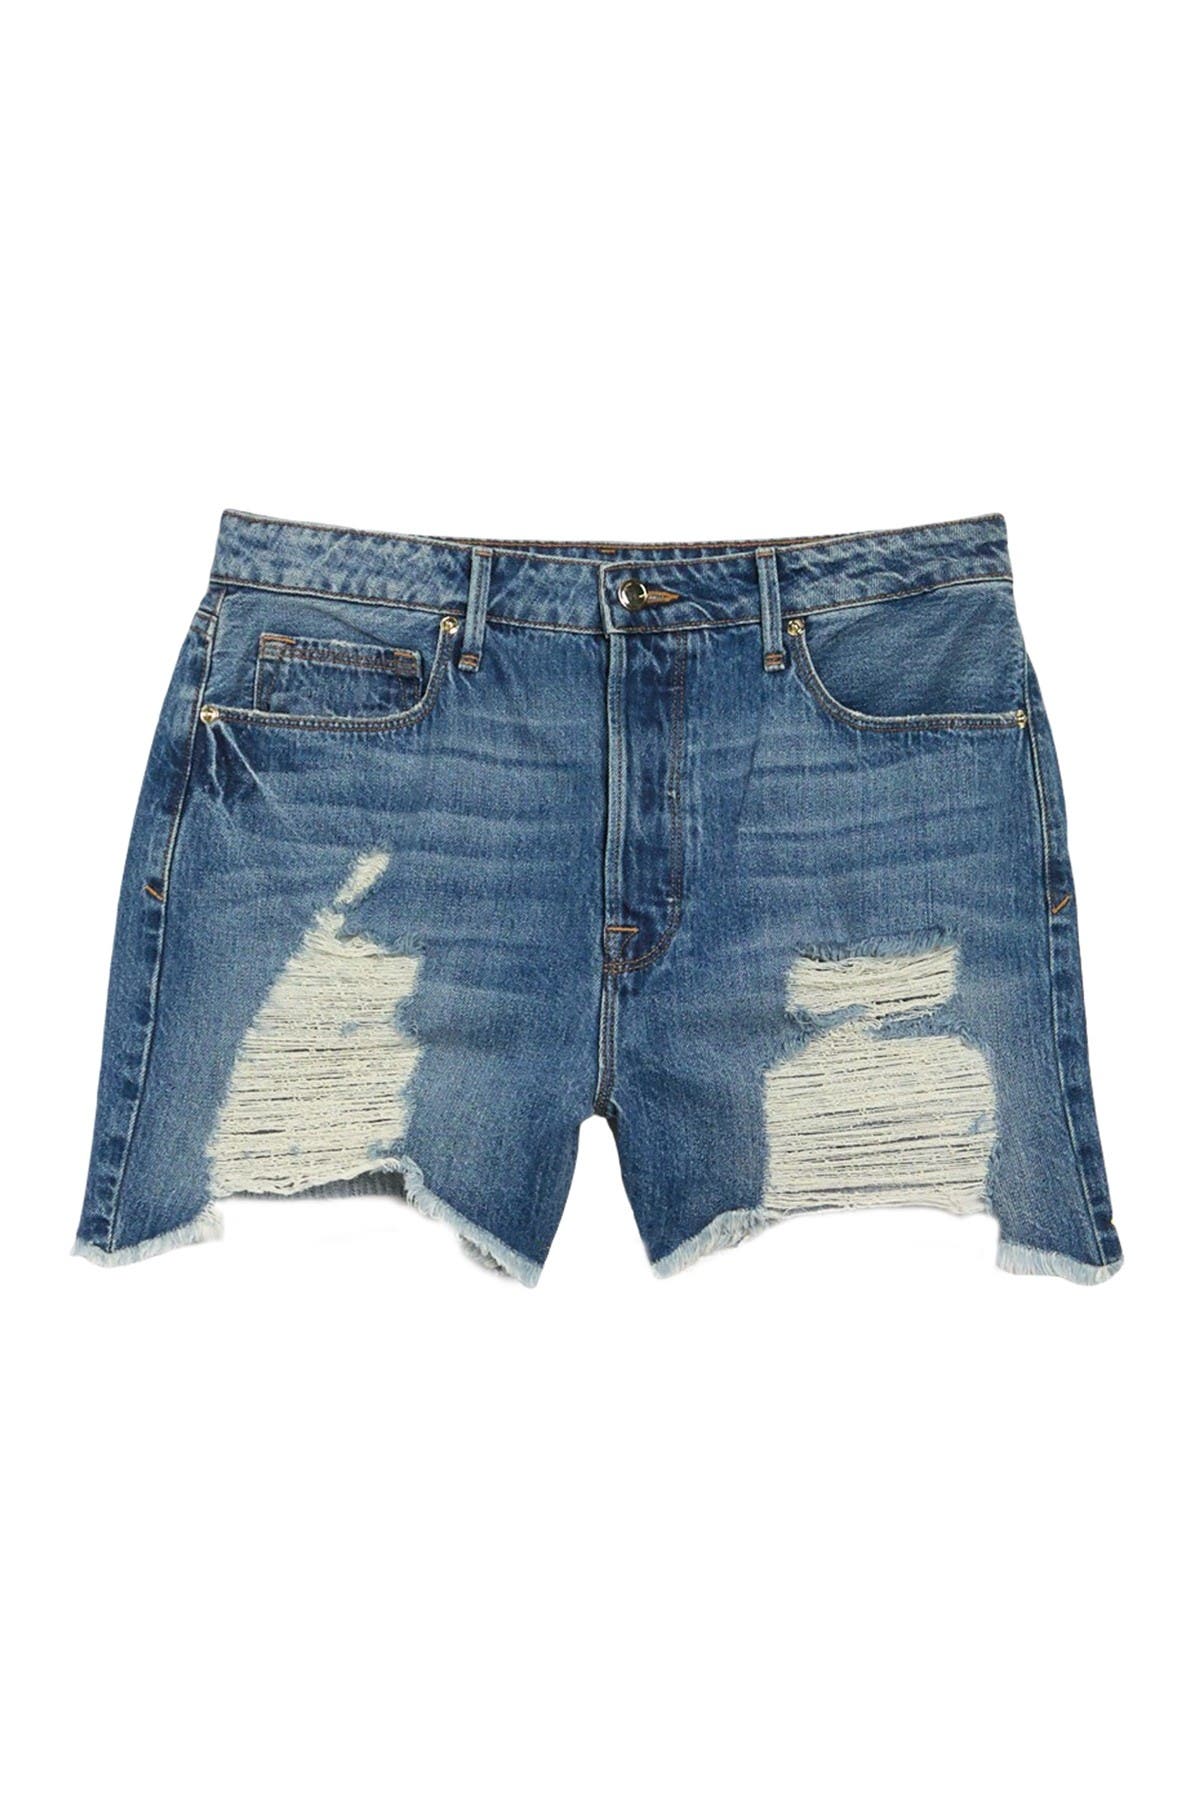 high waisted cutoff jean shorts